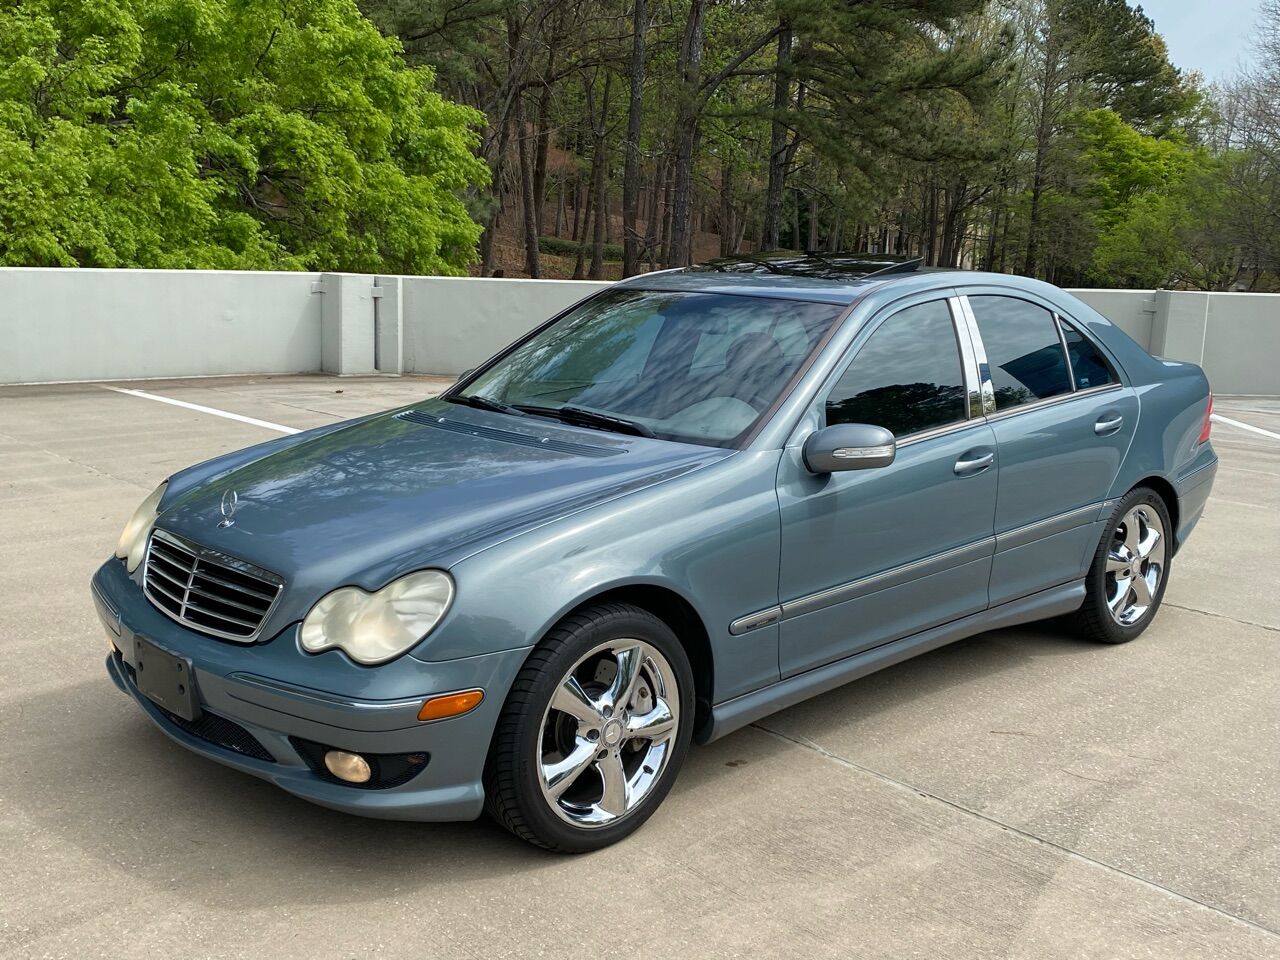 2005 Mercedes-Benz C-Class For Sale In Atlanta, GA - Carsforsale.com®